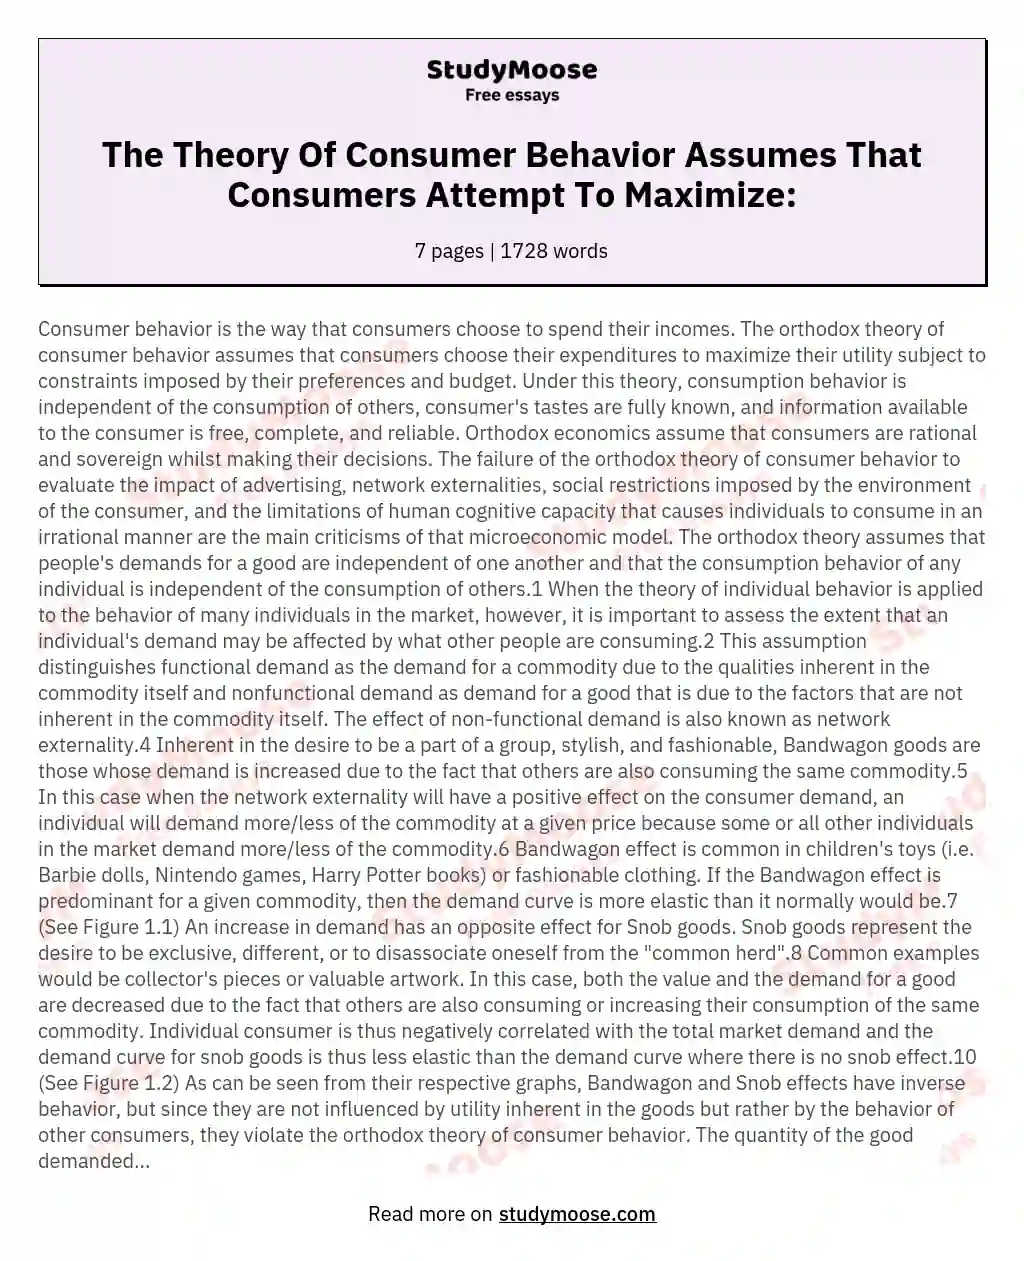 consumer behavior essay definition